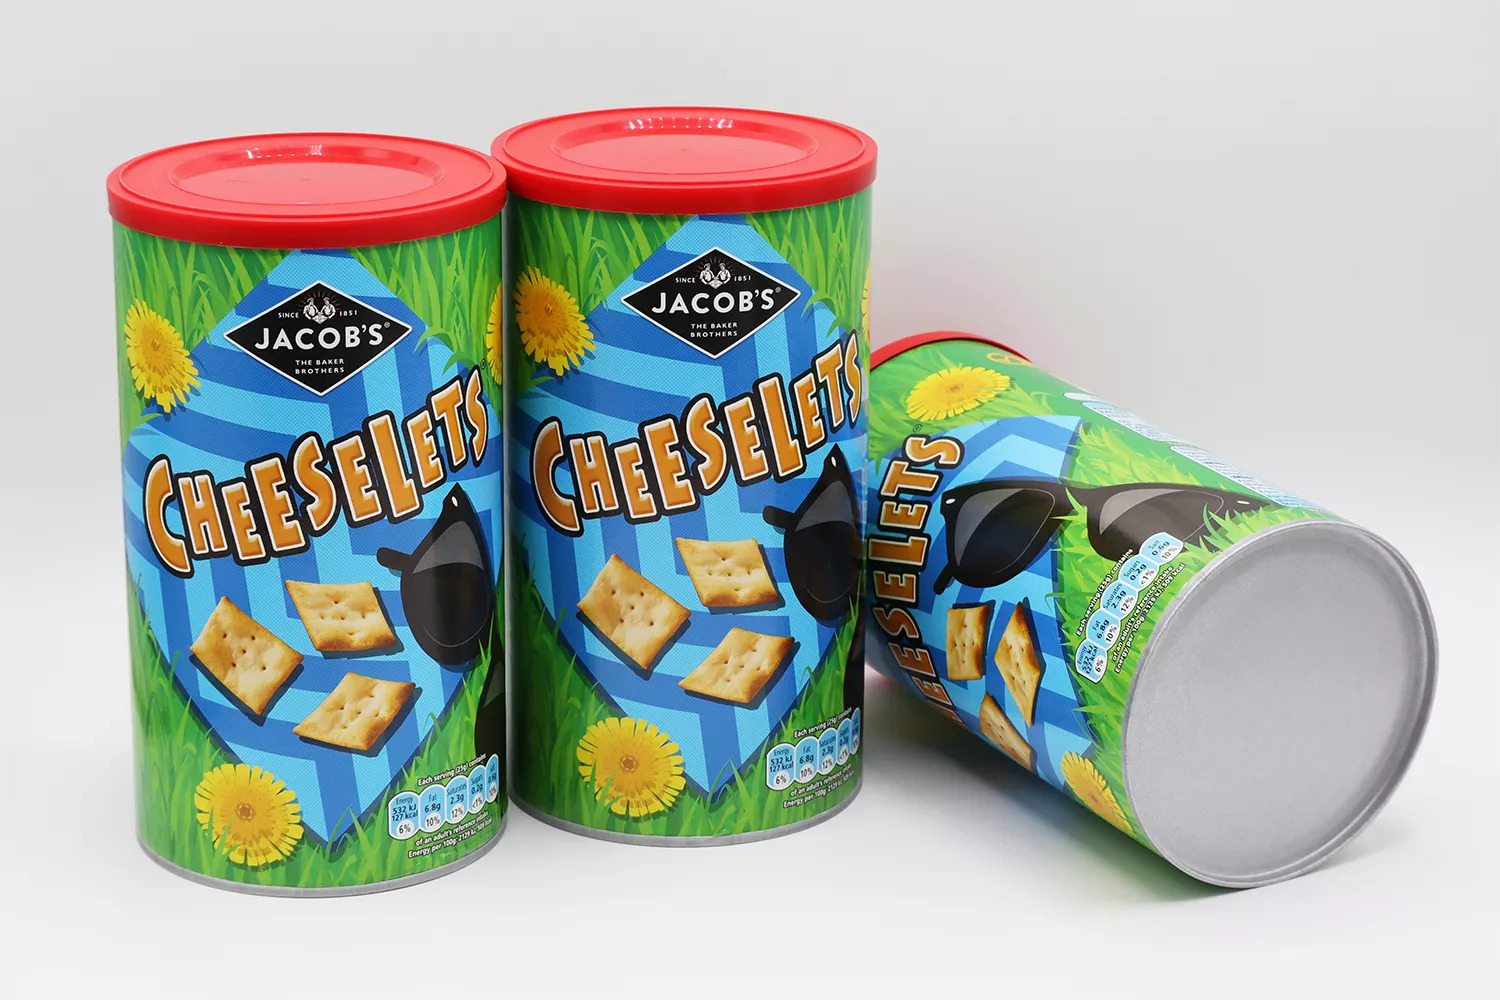 pladis Adopts Paper-Based Snack Packaging